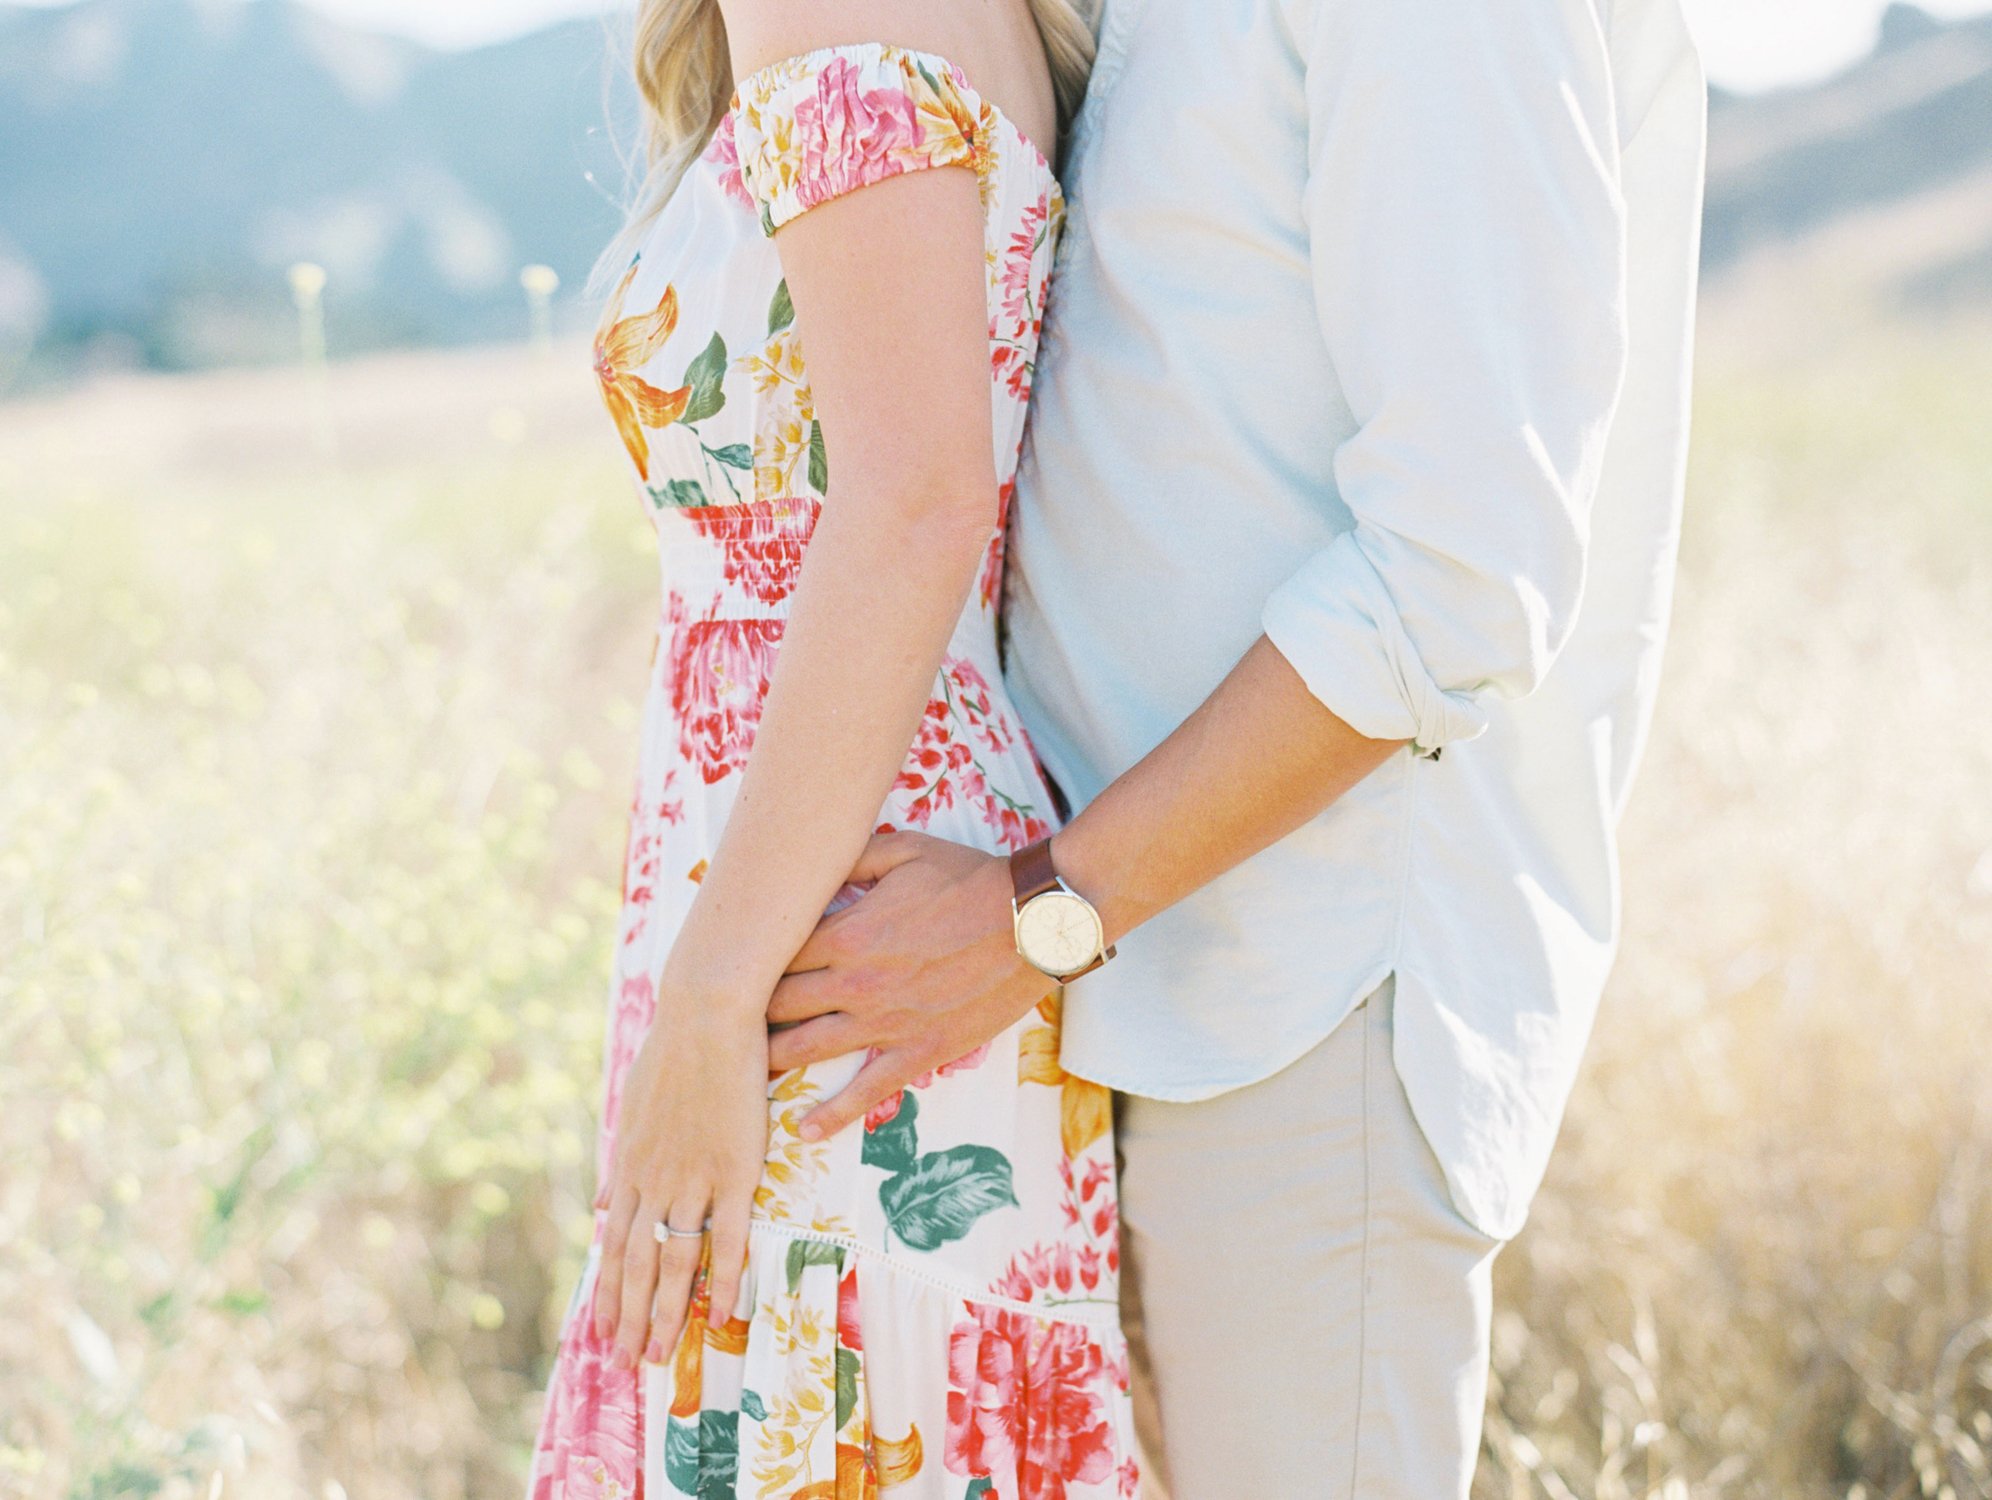 wisteria-photography.com | Wisteria Photography | Malibu Canyon | Weddings Engagement | Southern California Photographer-3.jpg